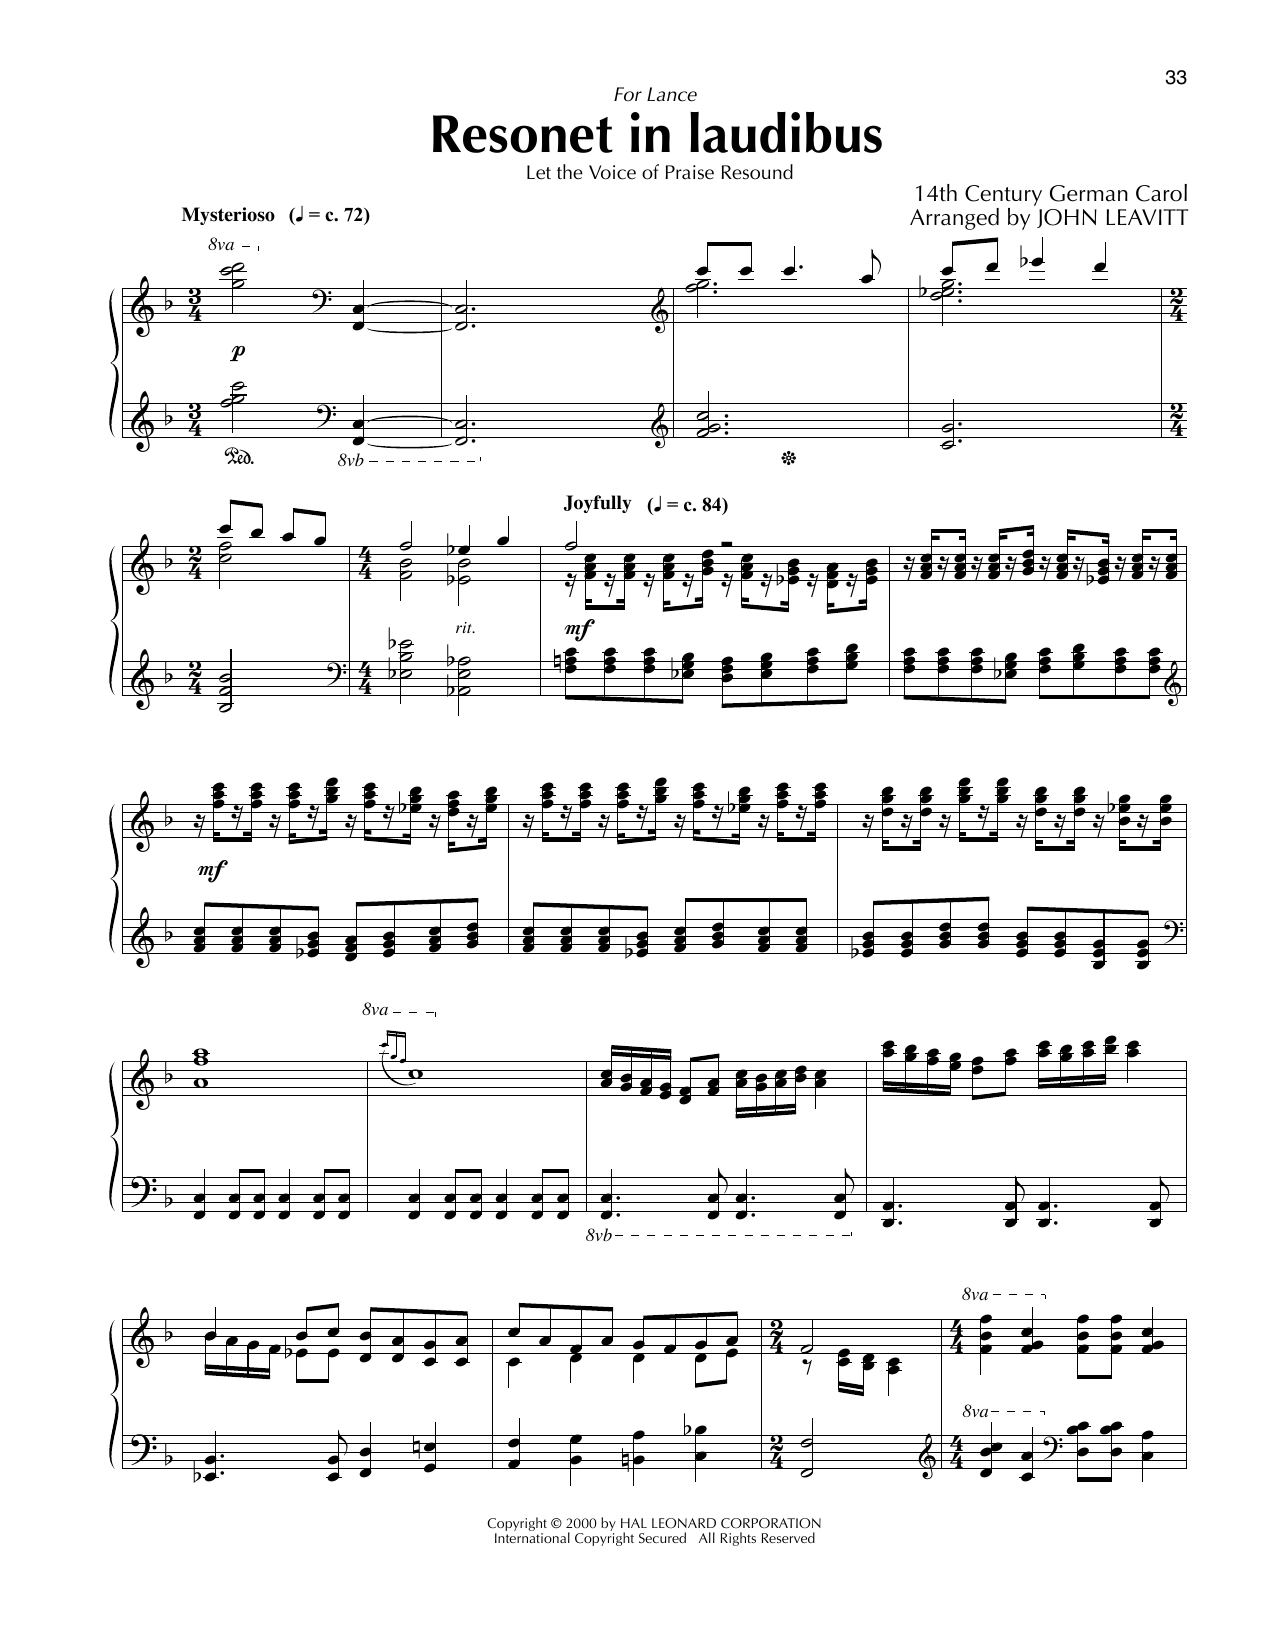 14th Century German Carol Resonet In Laudibus (arr. John Leavitt) Sheet Music Notes & Chords for Piano Solo - Download or Print PDF